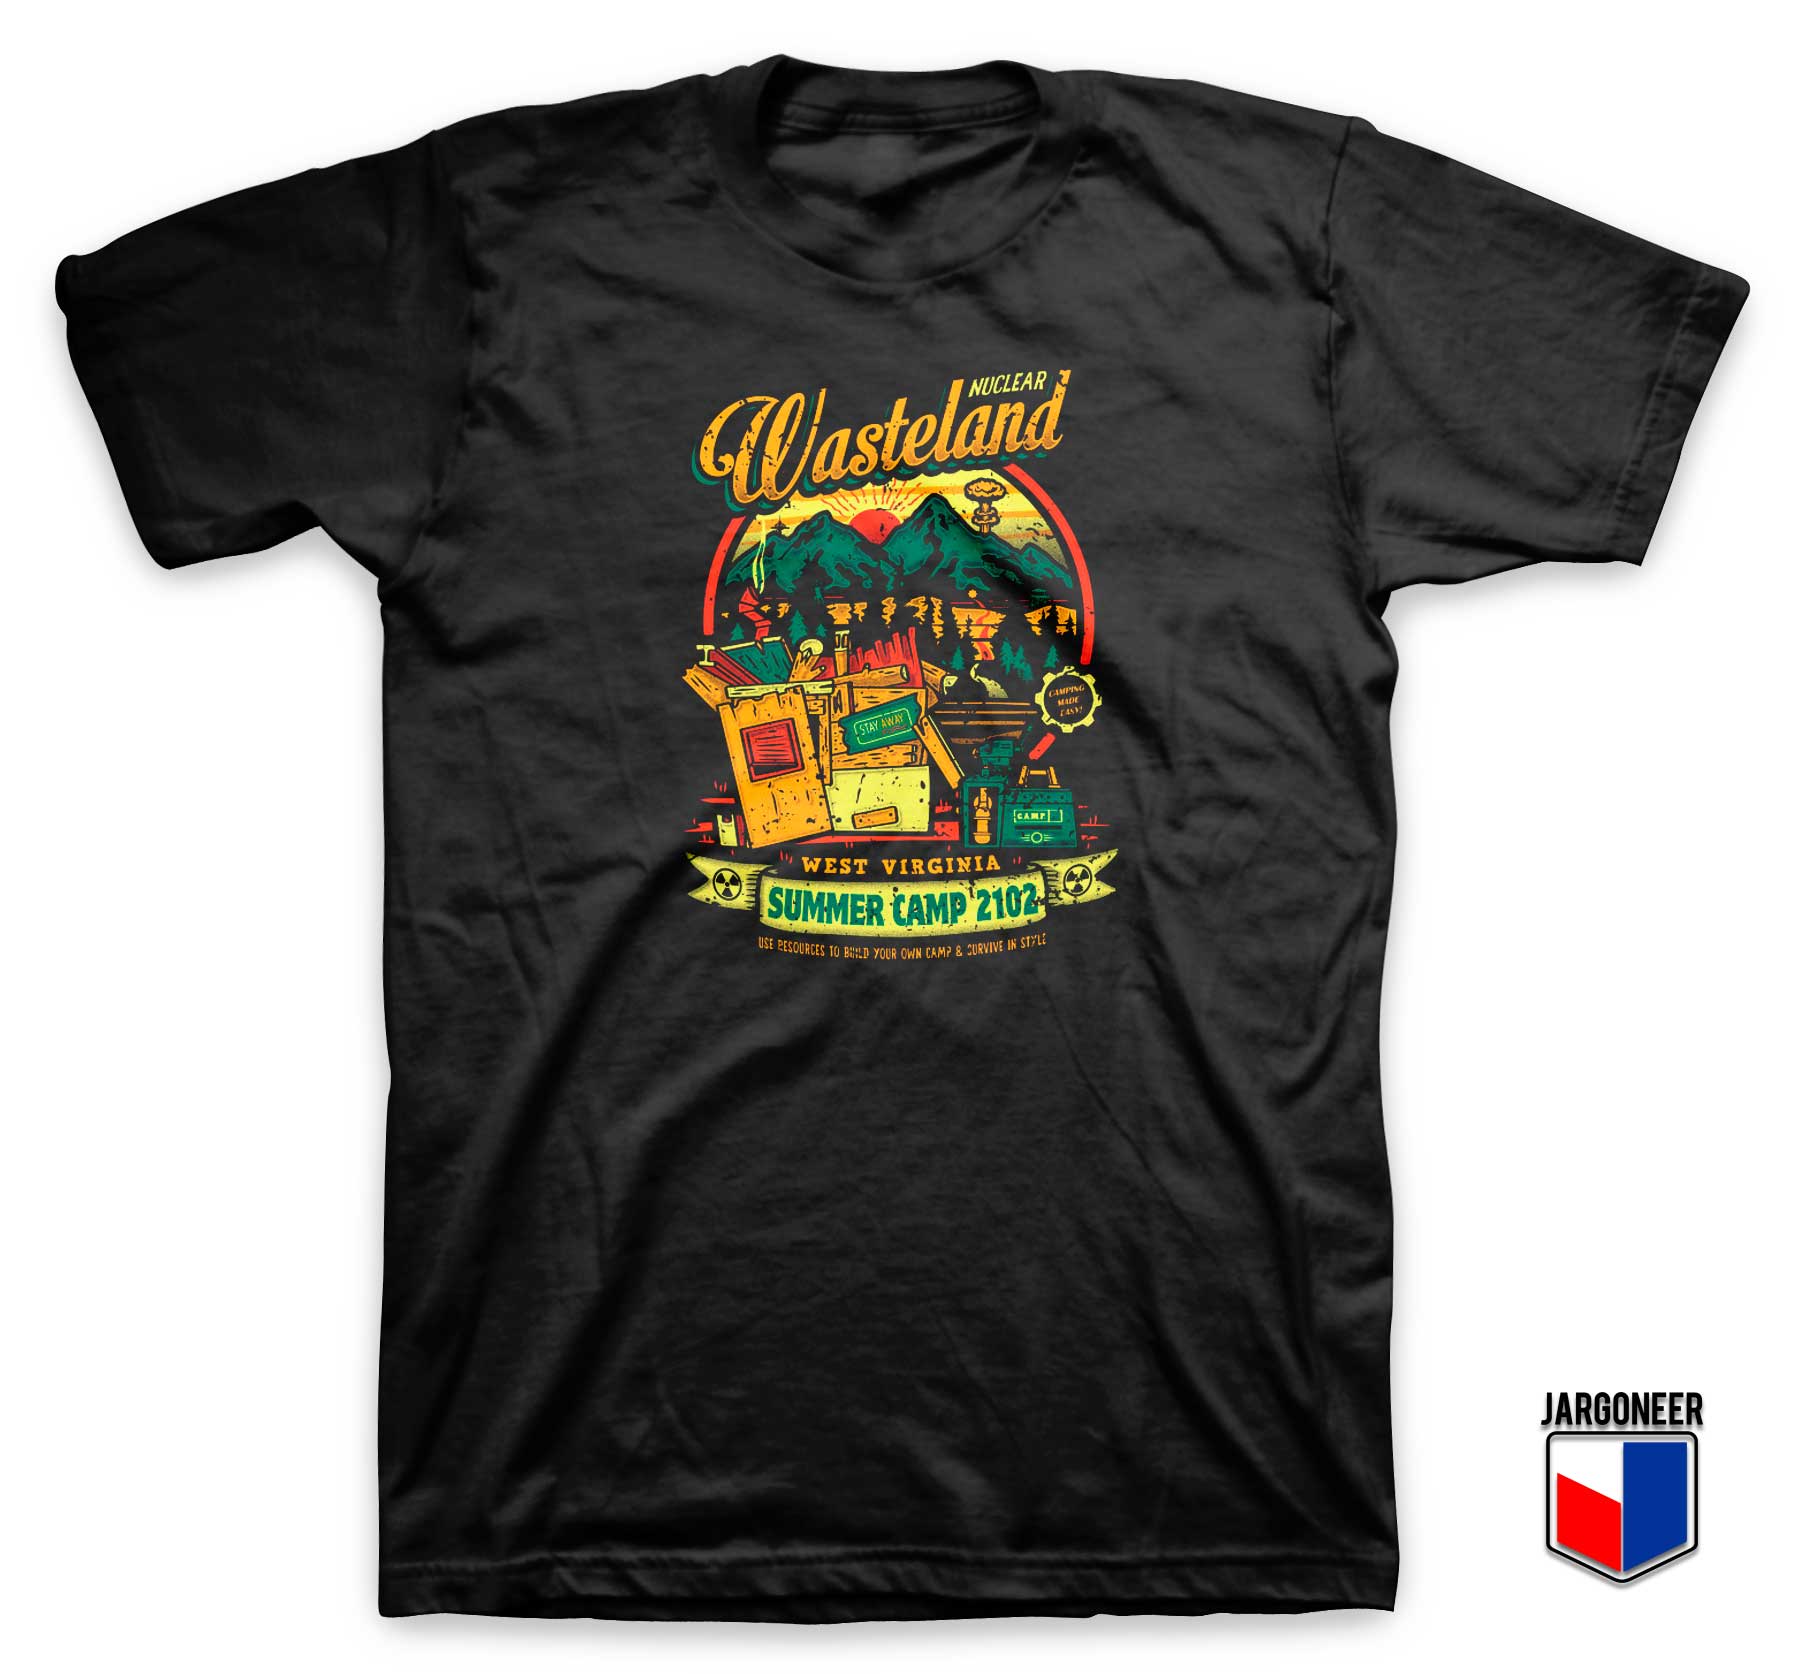 Nuclear Wasteland Summer Camp T Shirt - Shop Unique Graphic Cool Shirt Designs